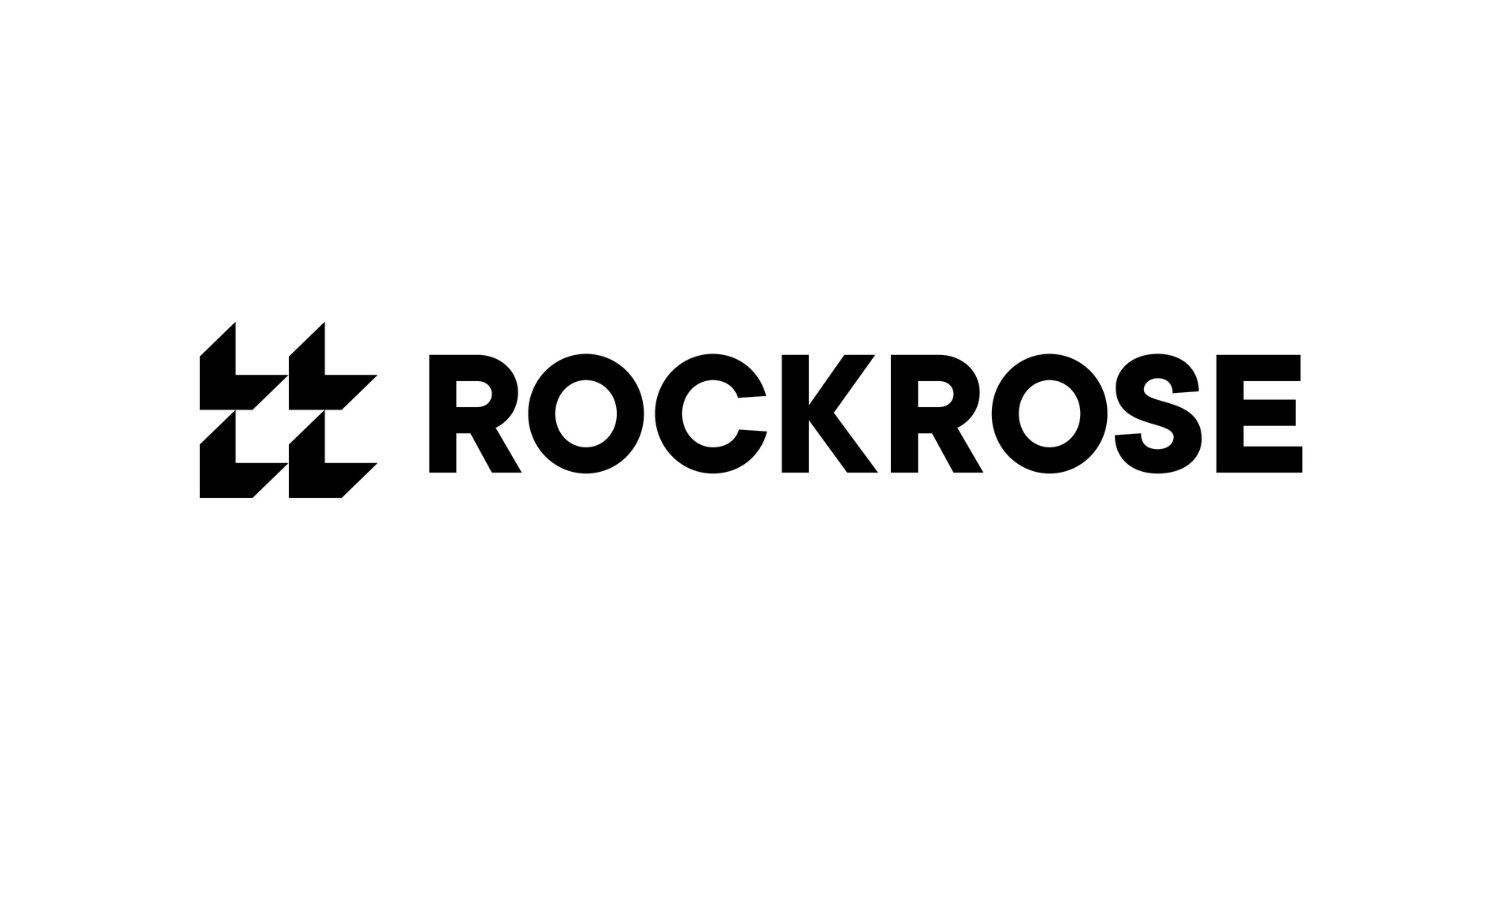 Rockrose